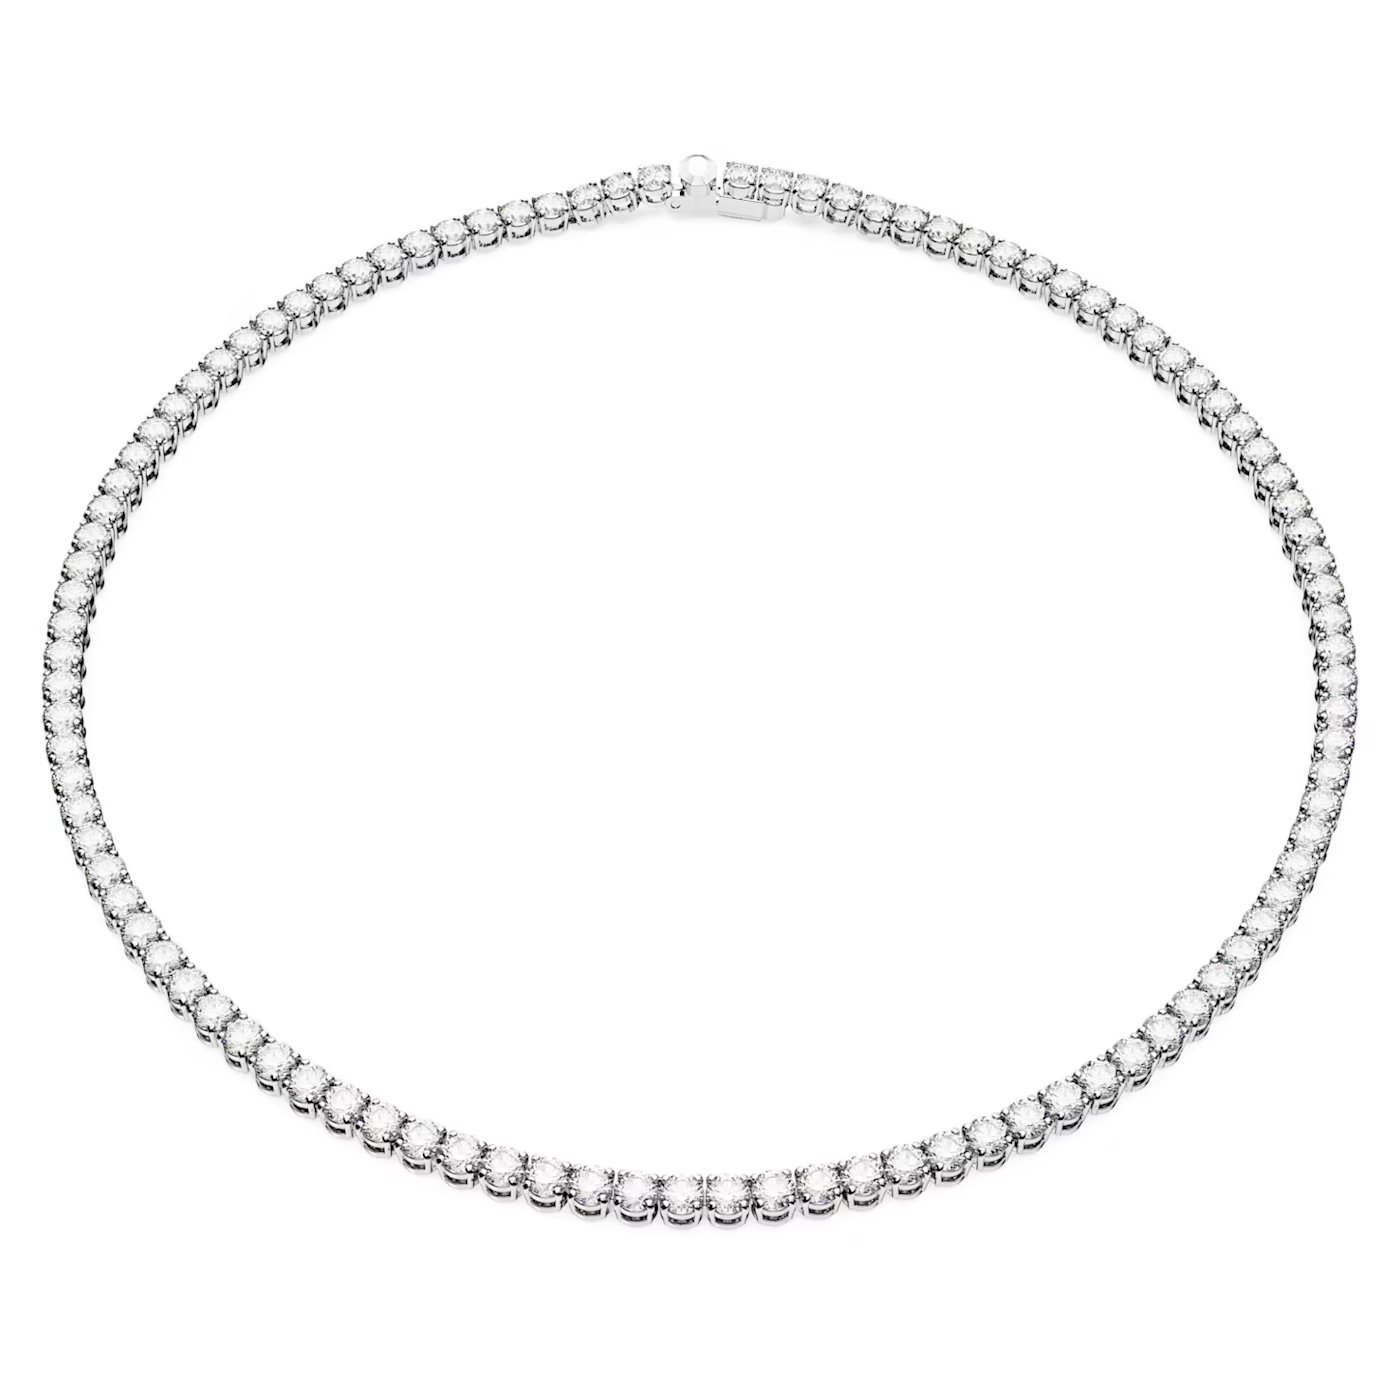 63da6031cbac6_matrix-tennis-necklace--round-cut--small--white--rhodium-plated-swarovski-5662140.jpg